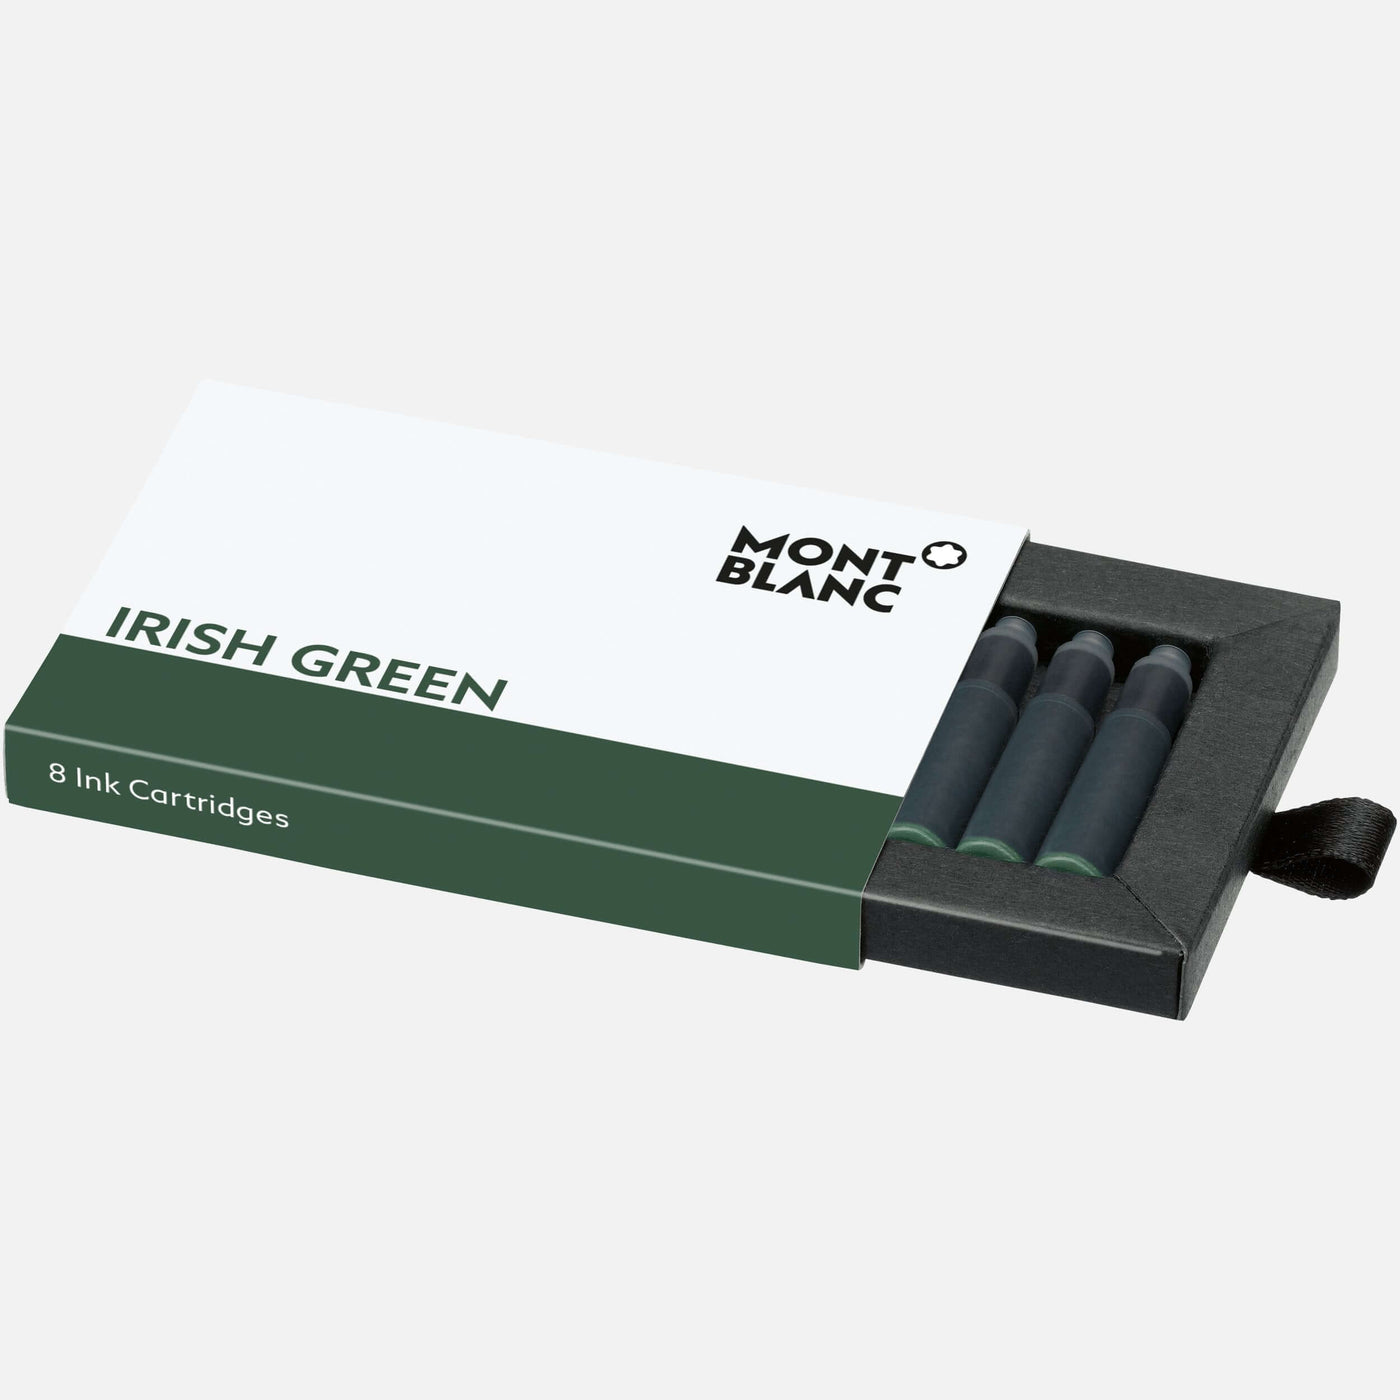 Refill Montblanc Irish Green Ink Cartridges | Pen Store | Pen Place